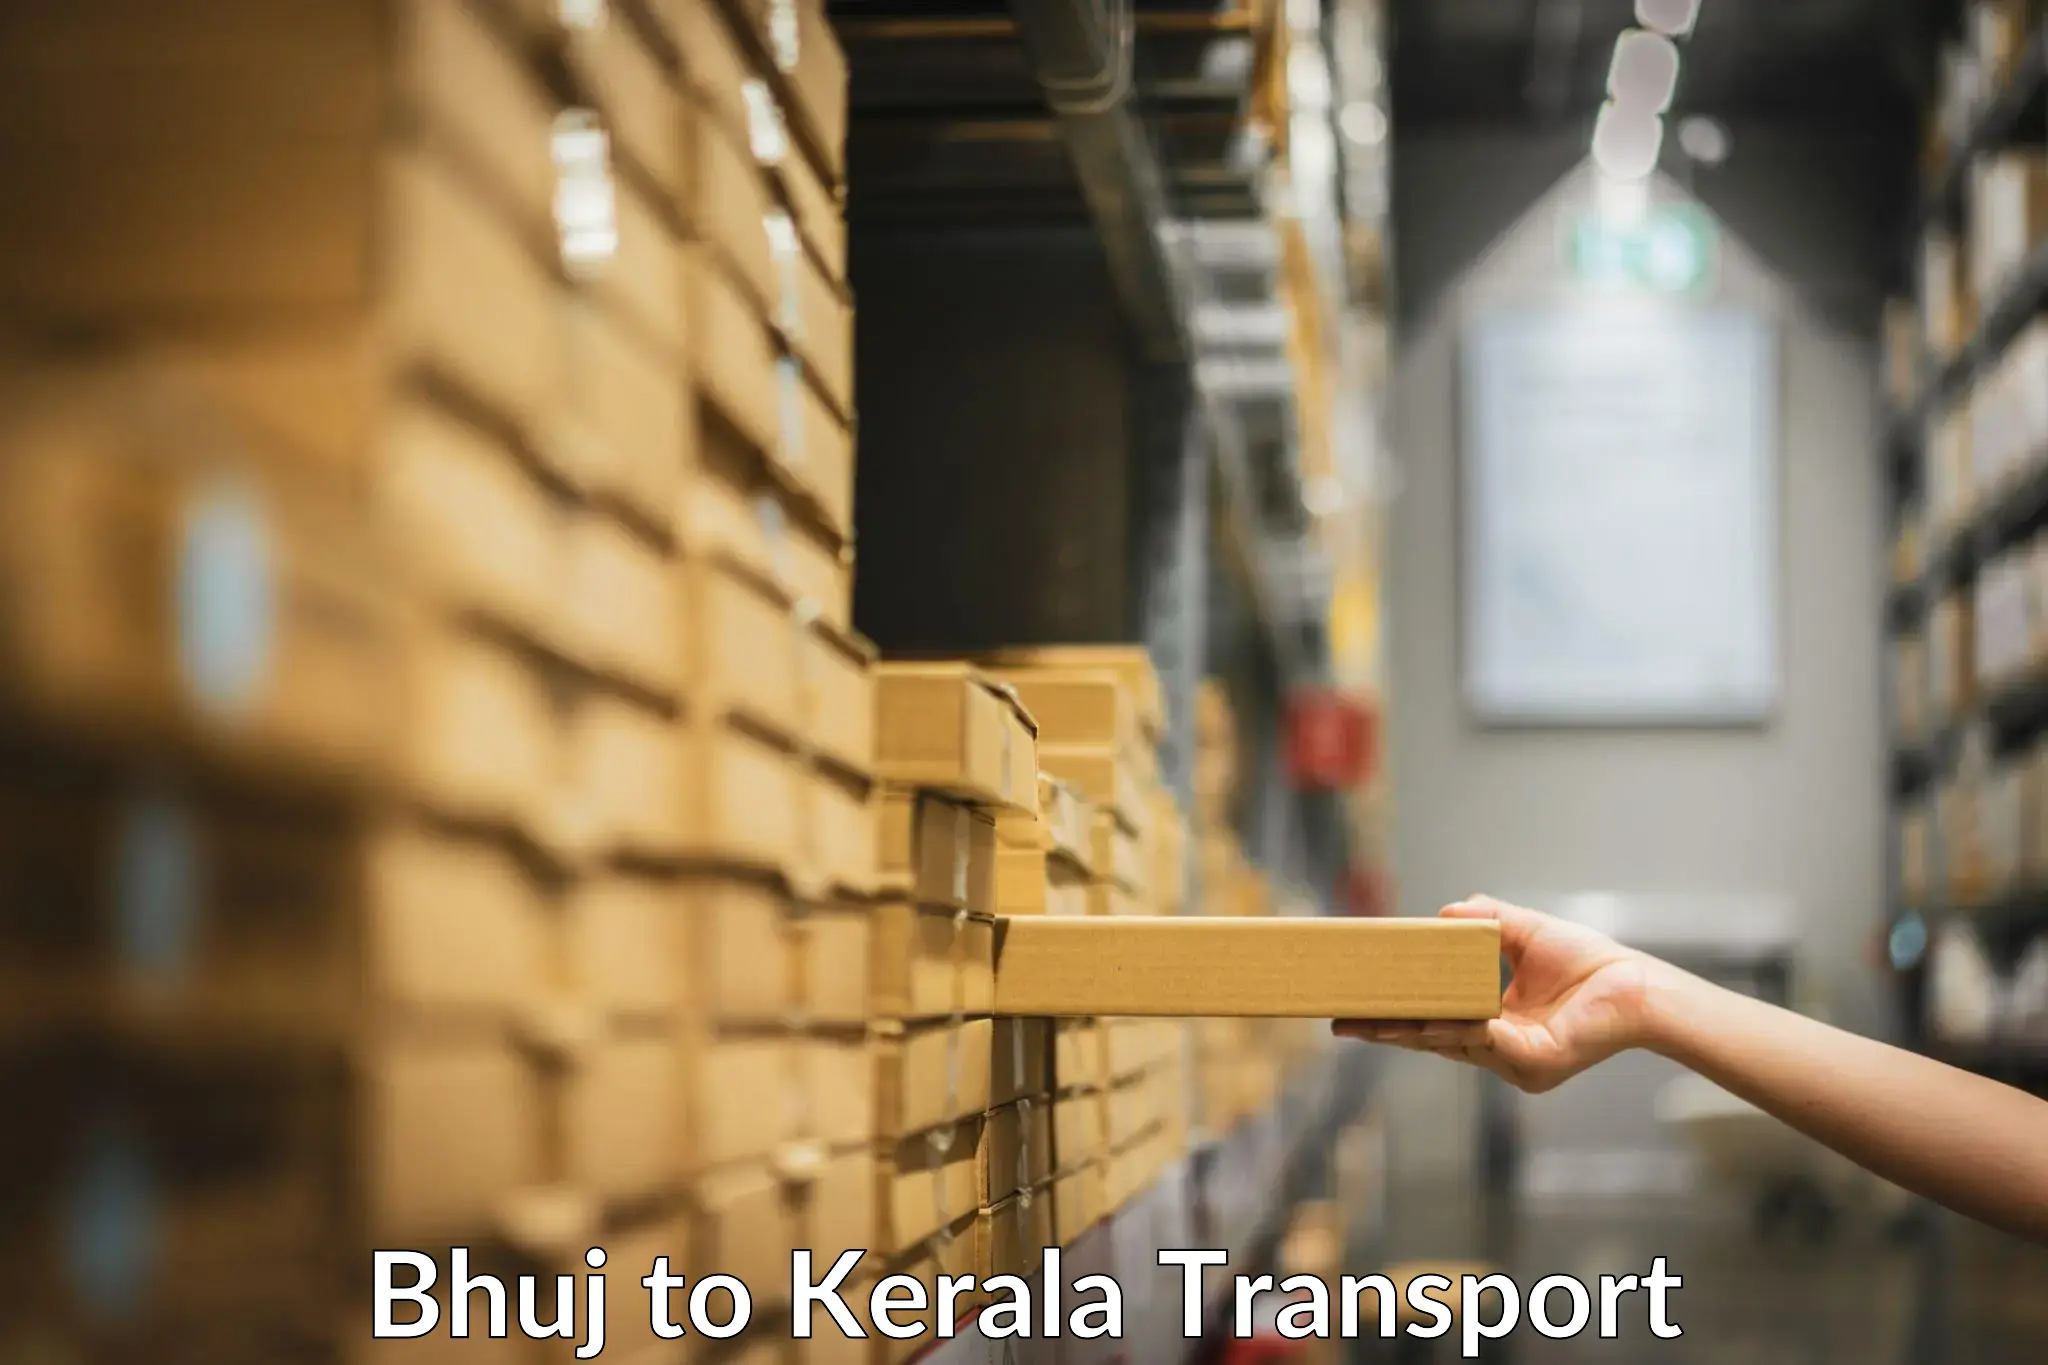 Pick up transport service Bhuj to Kochi